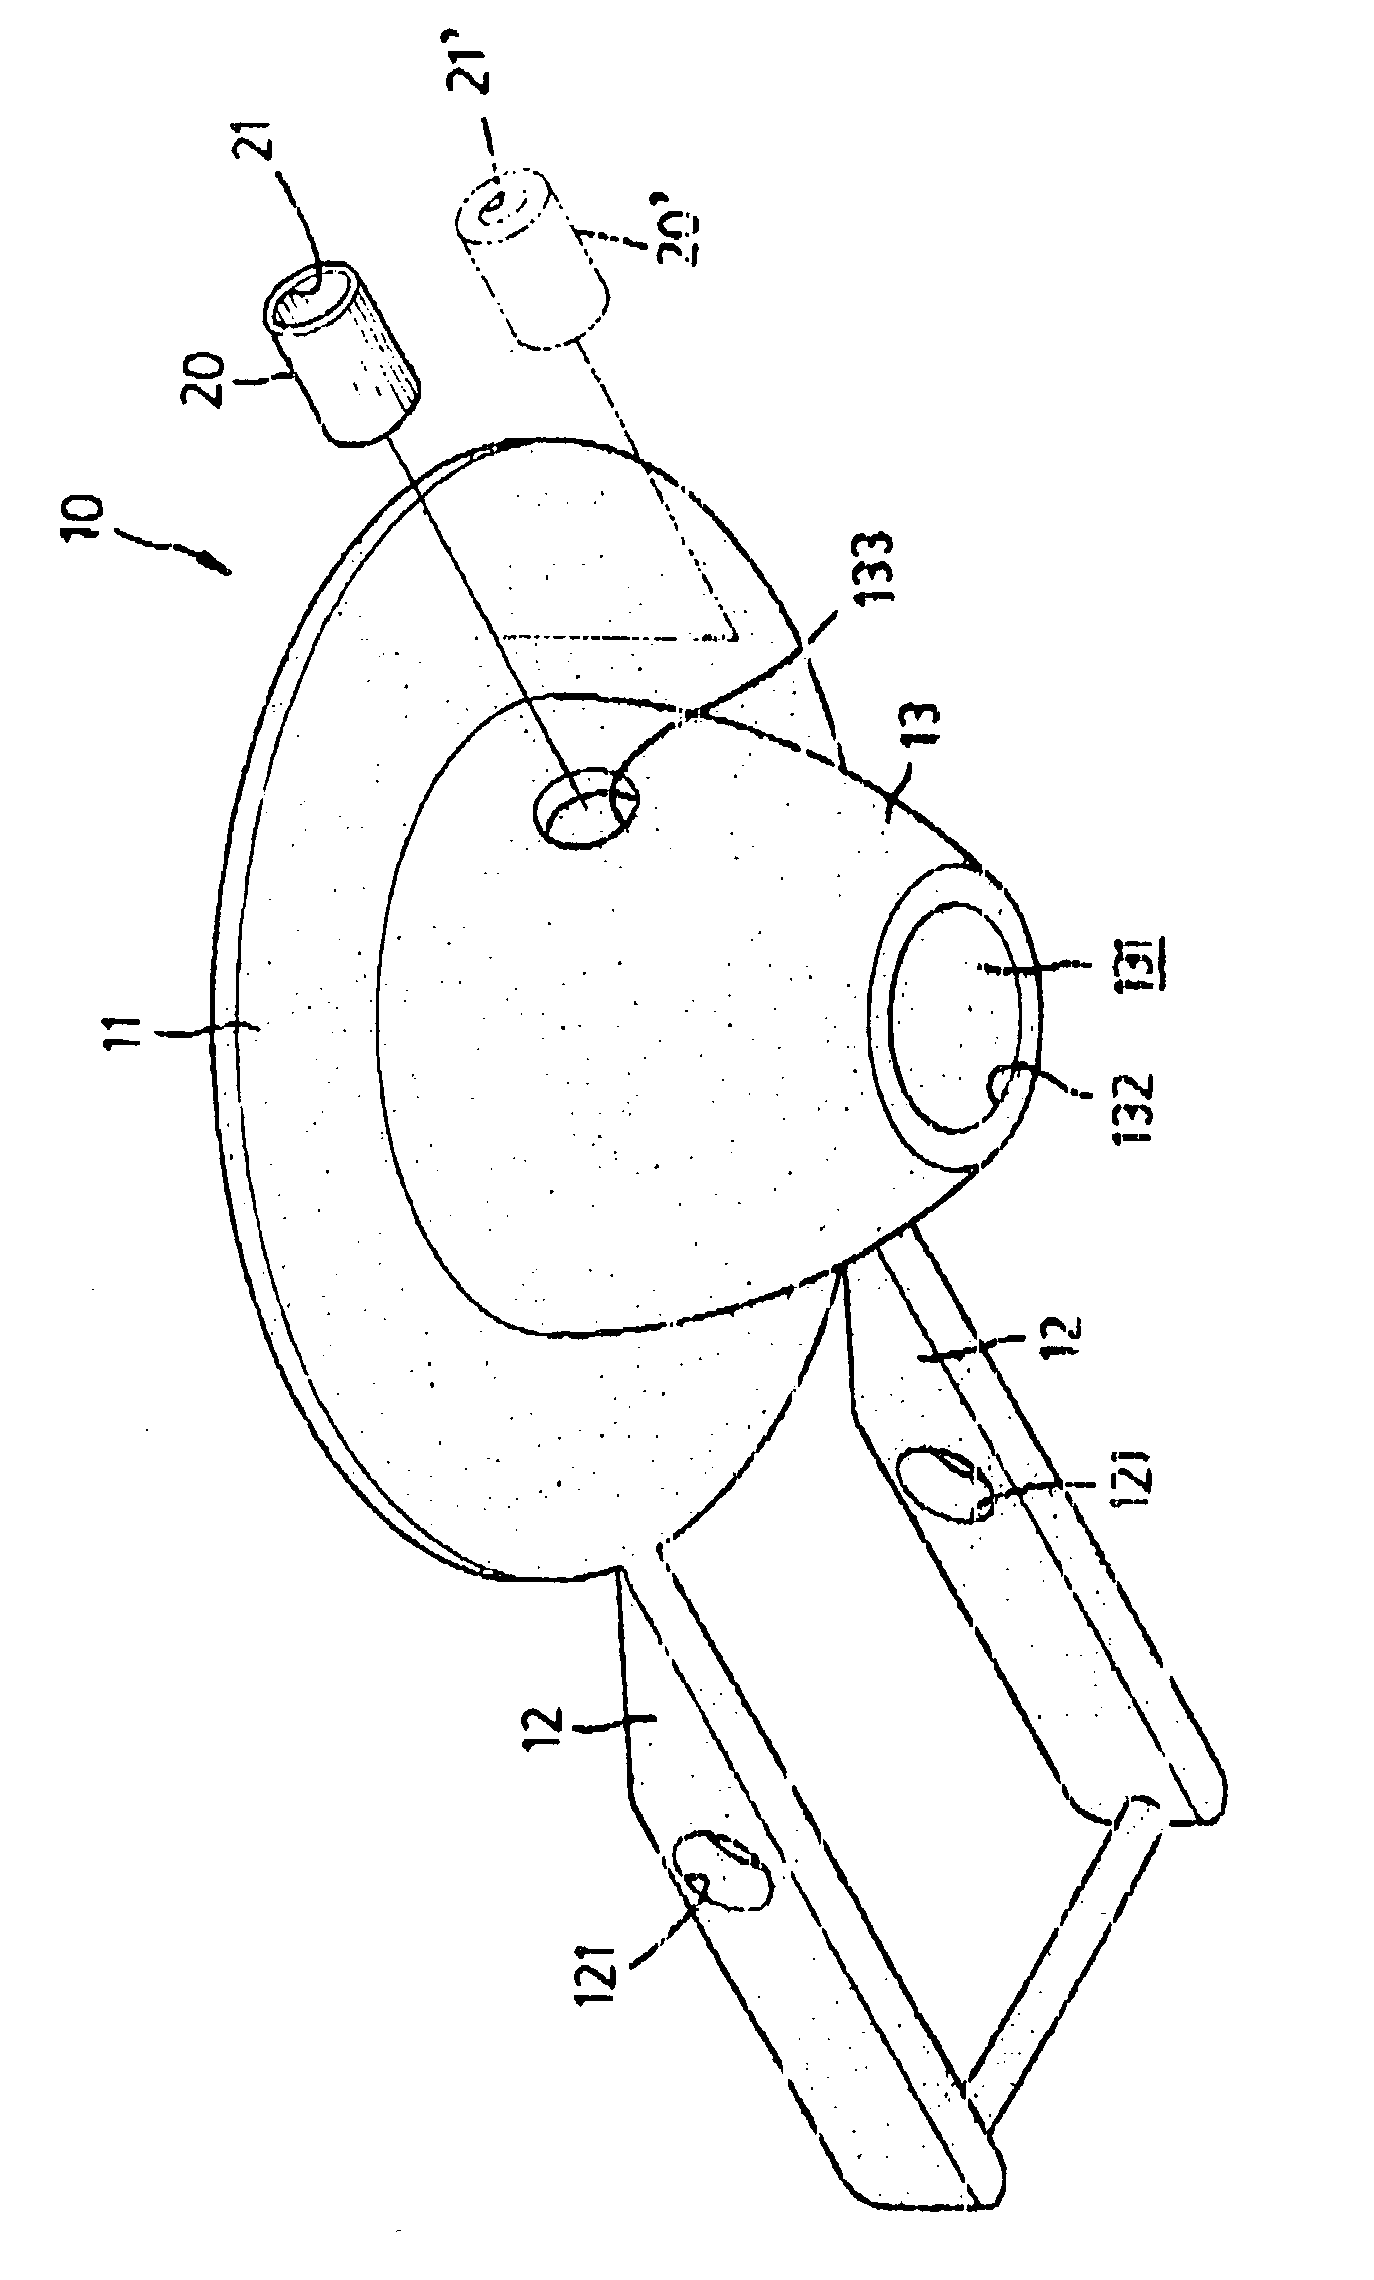 Flapper valve for a toilet tank